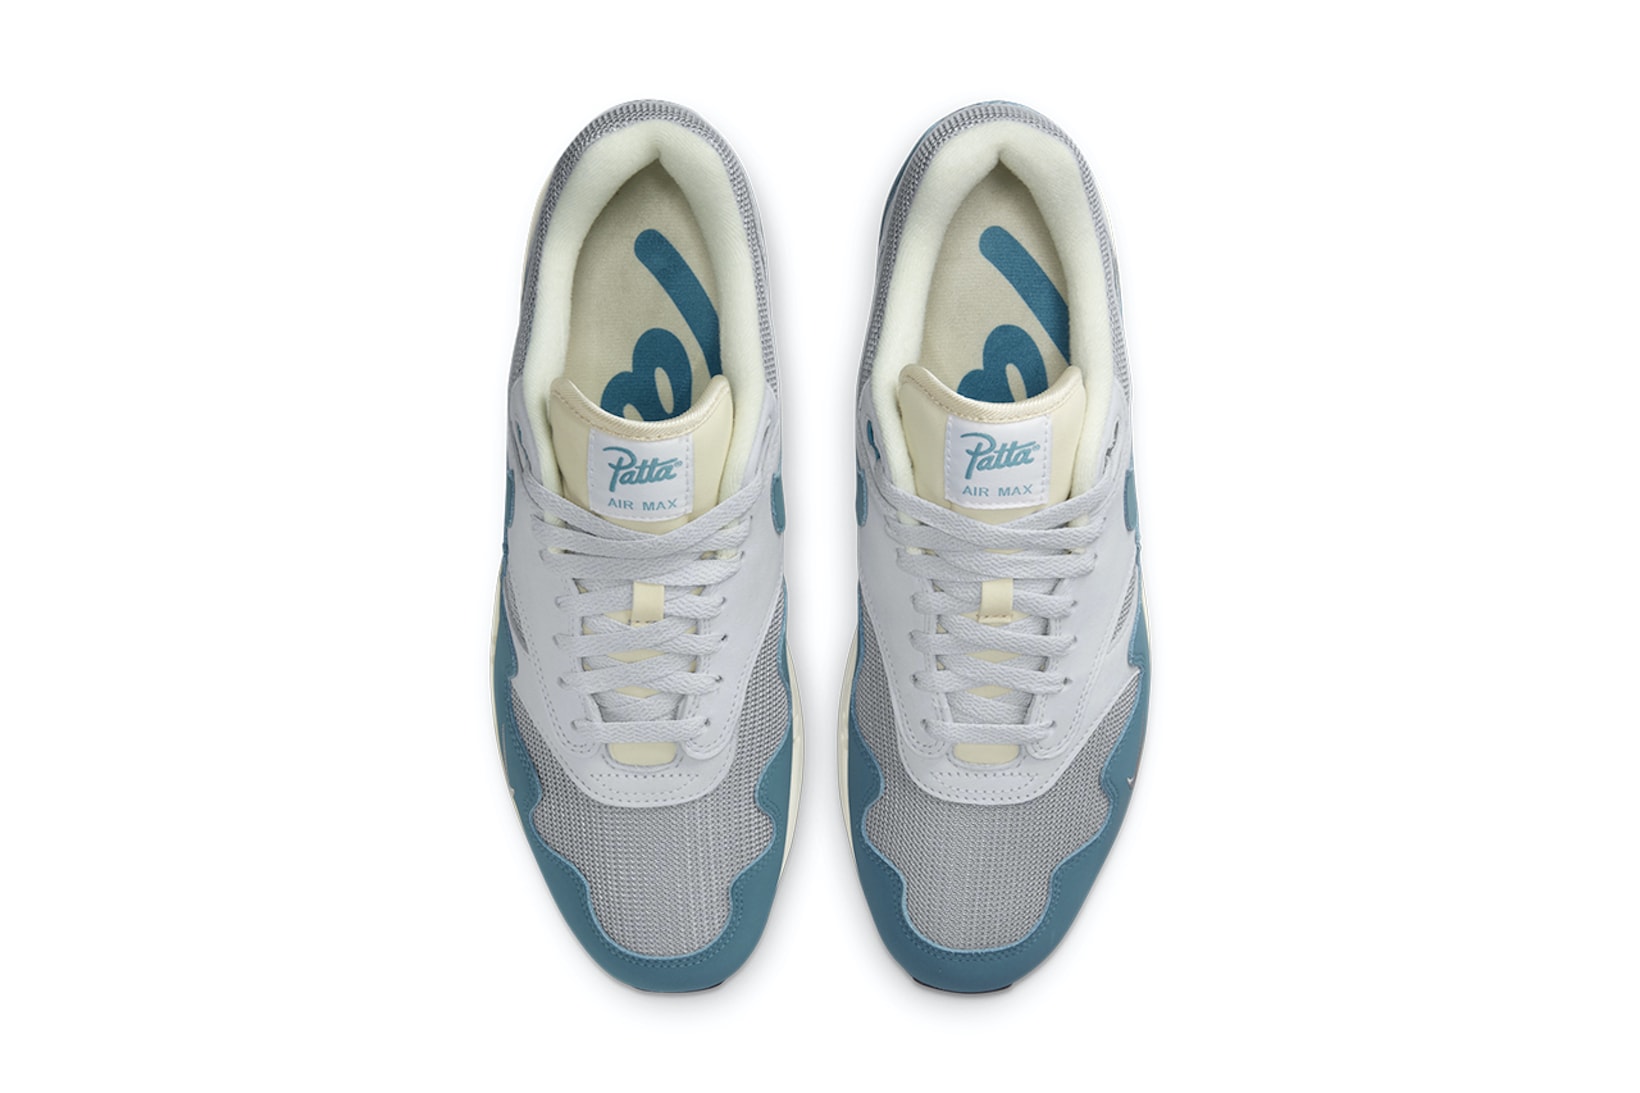 patta nike air max 1 am1 noise aqua blue gray white collaboration sneakers footwear kicks shoes aerial insoles